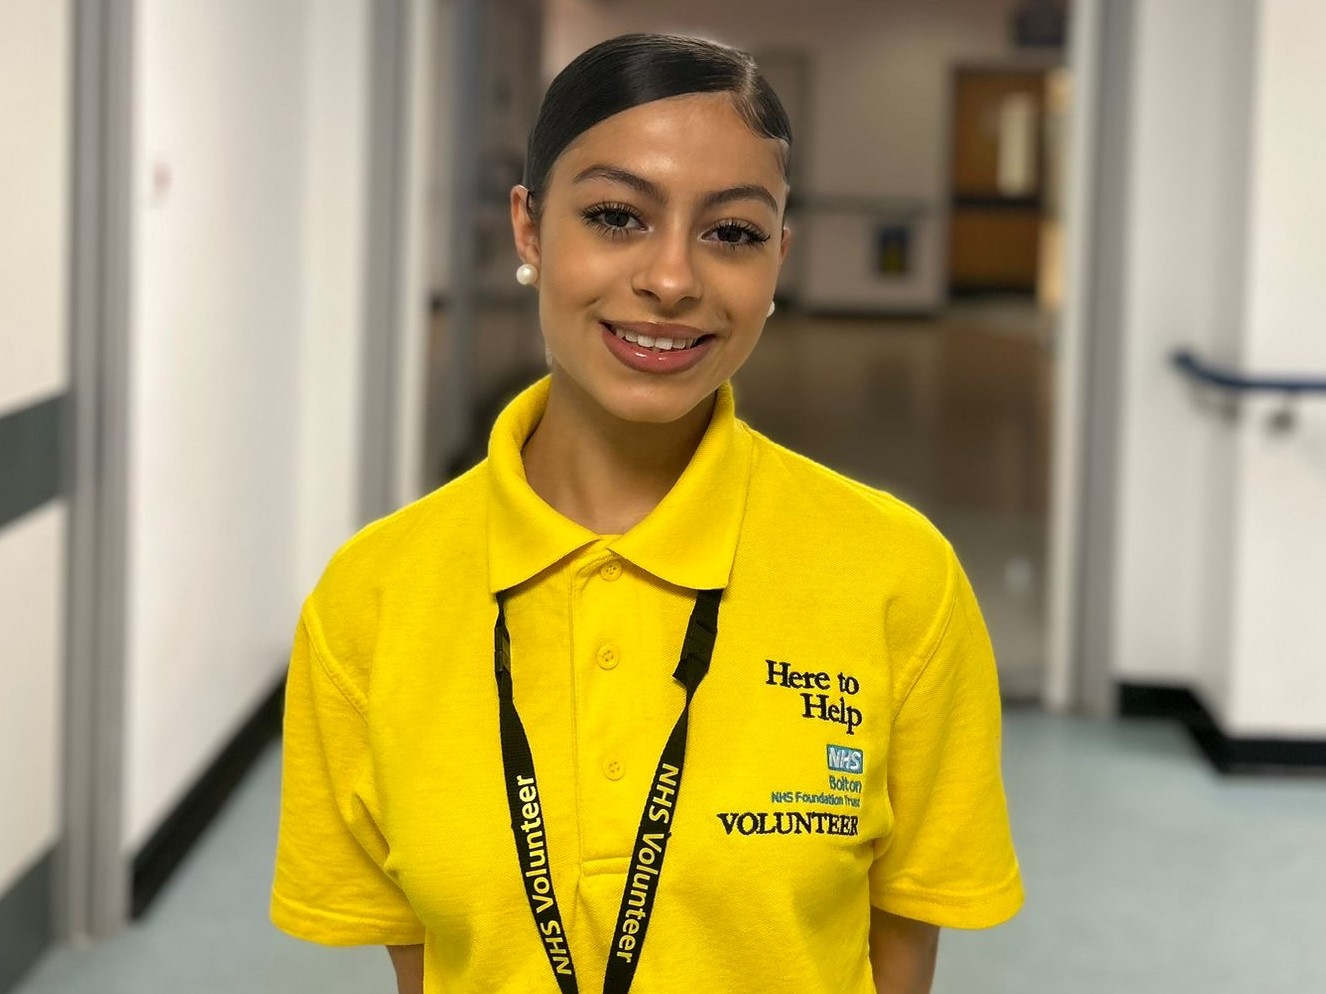 Volunteer Silvana Rushdi wears a bright yellow tshirt